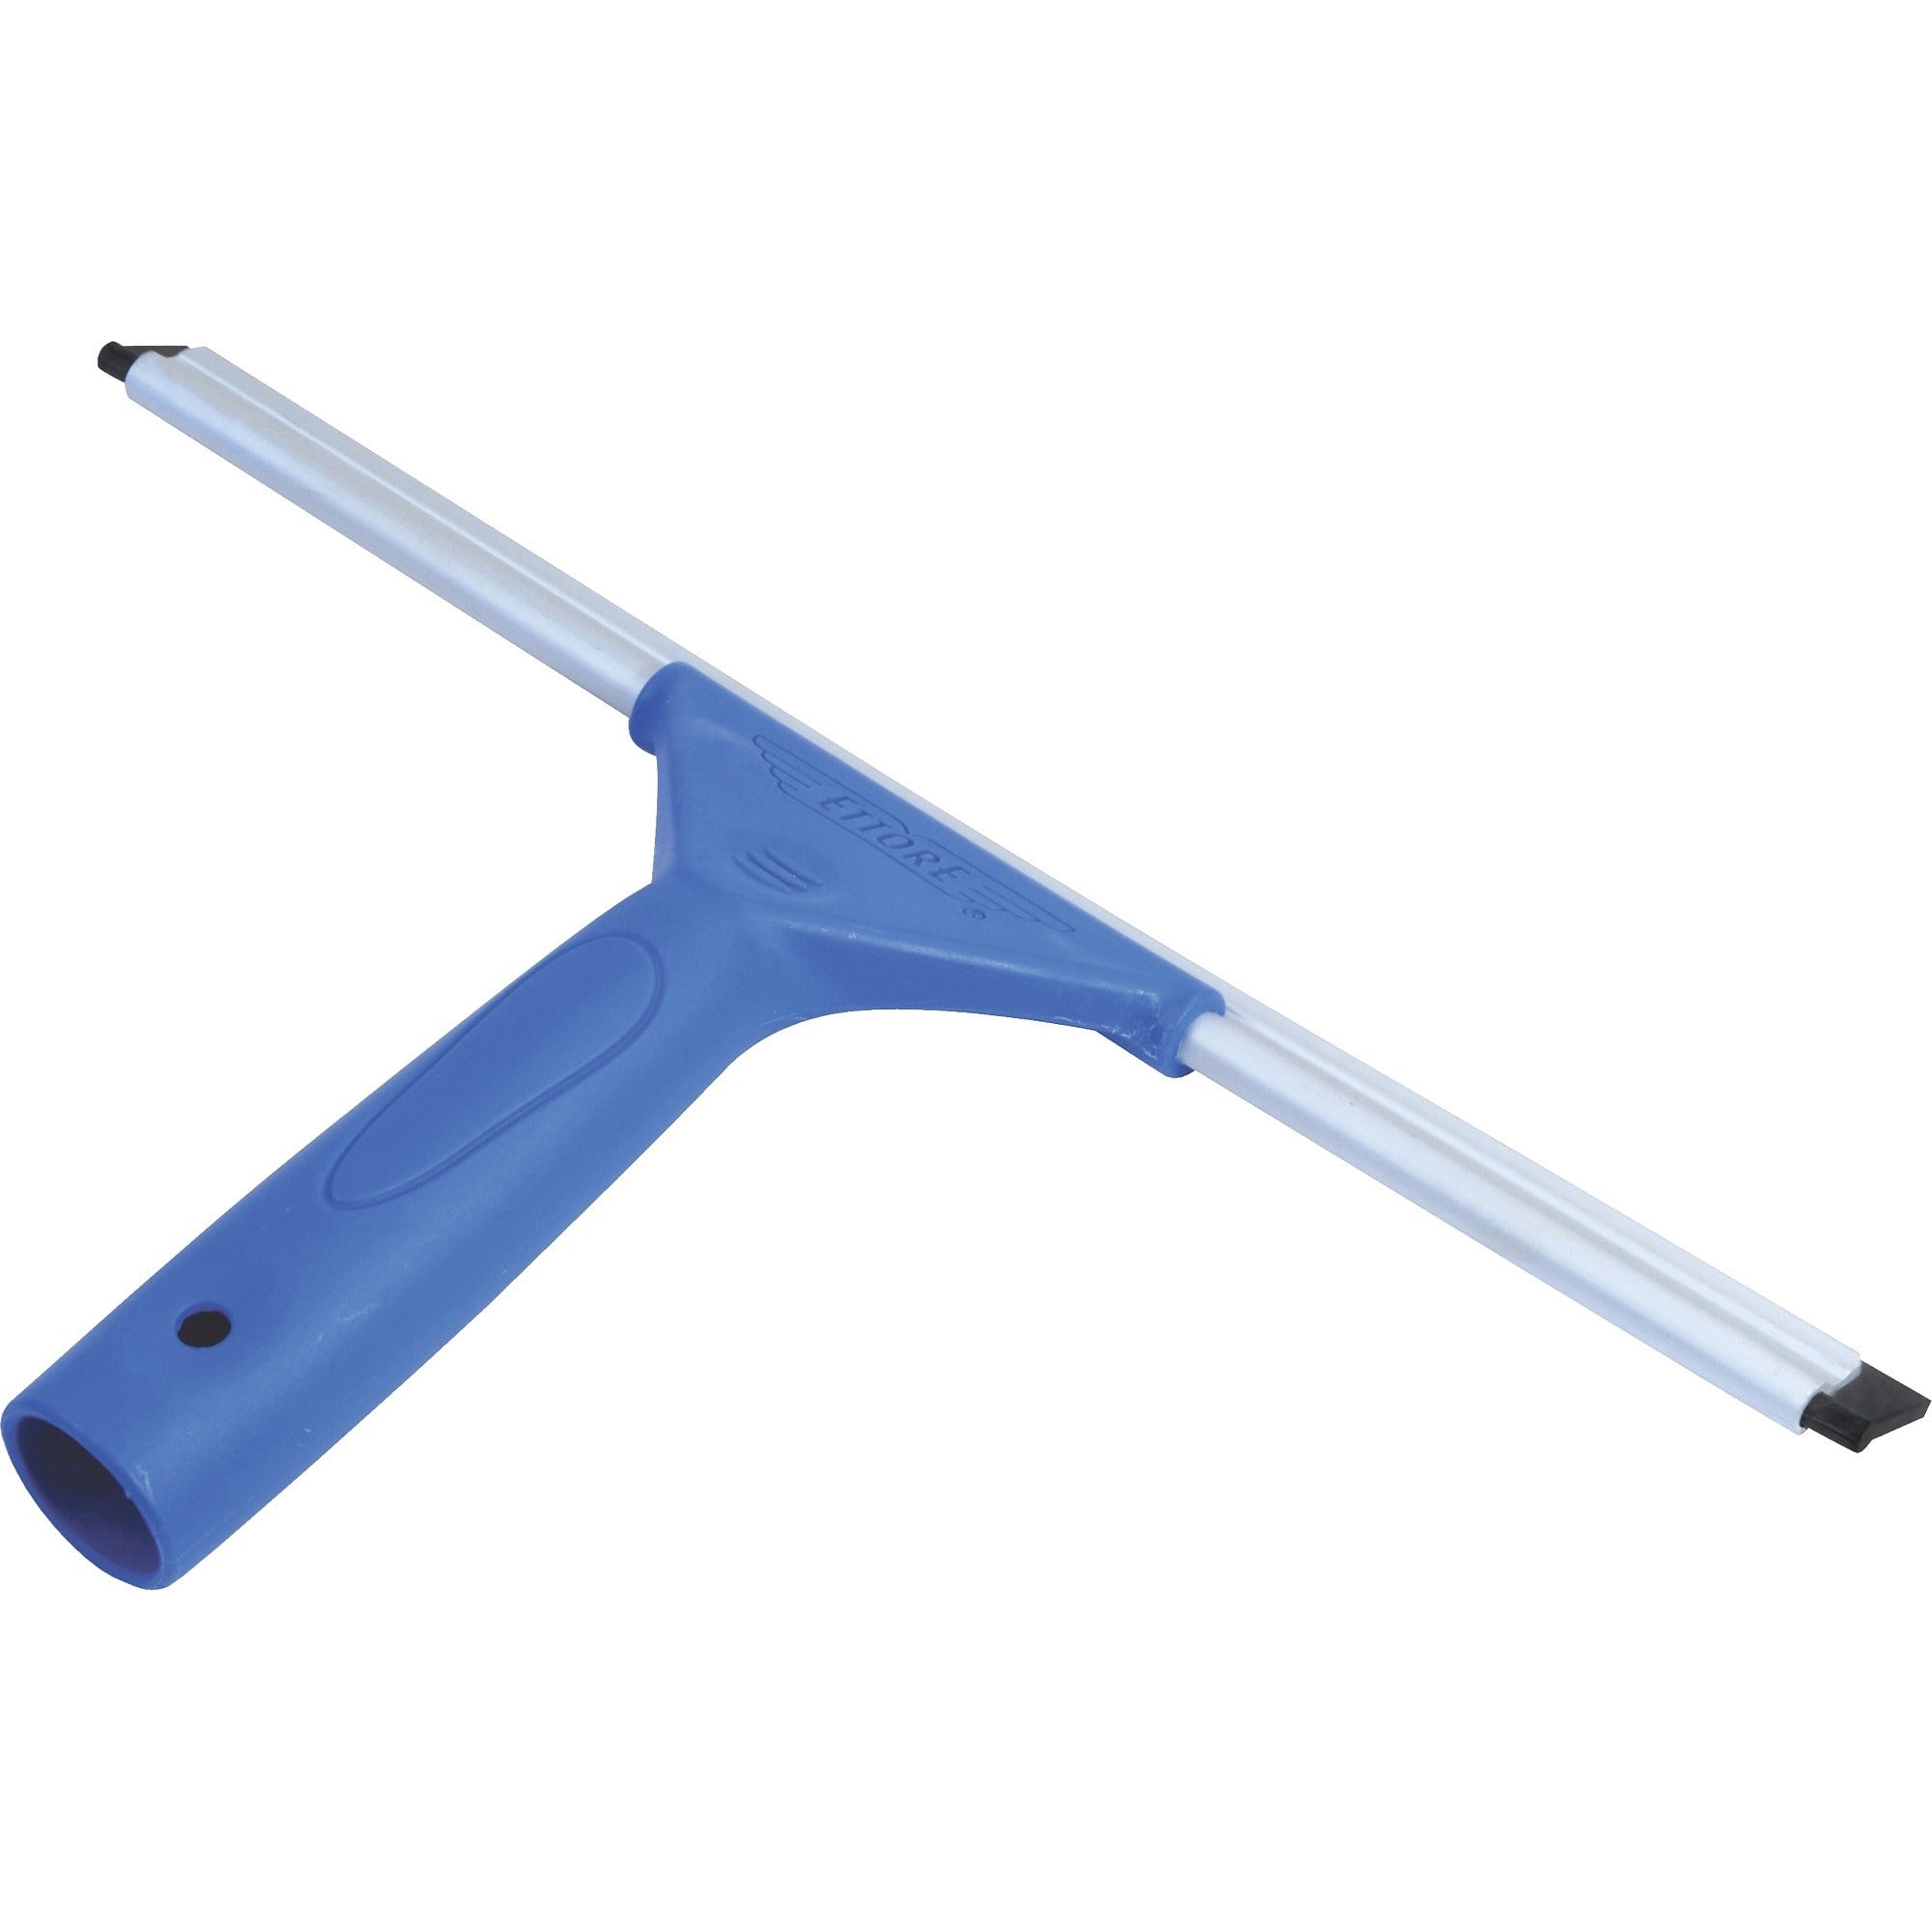 ettore-all-purpose-squeegee-rubber-blade-plastic-handle-65-height-x-14-width-x-15-length-lightweight-streak-free-blue-1each_eto17014 - 1